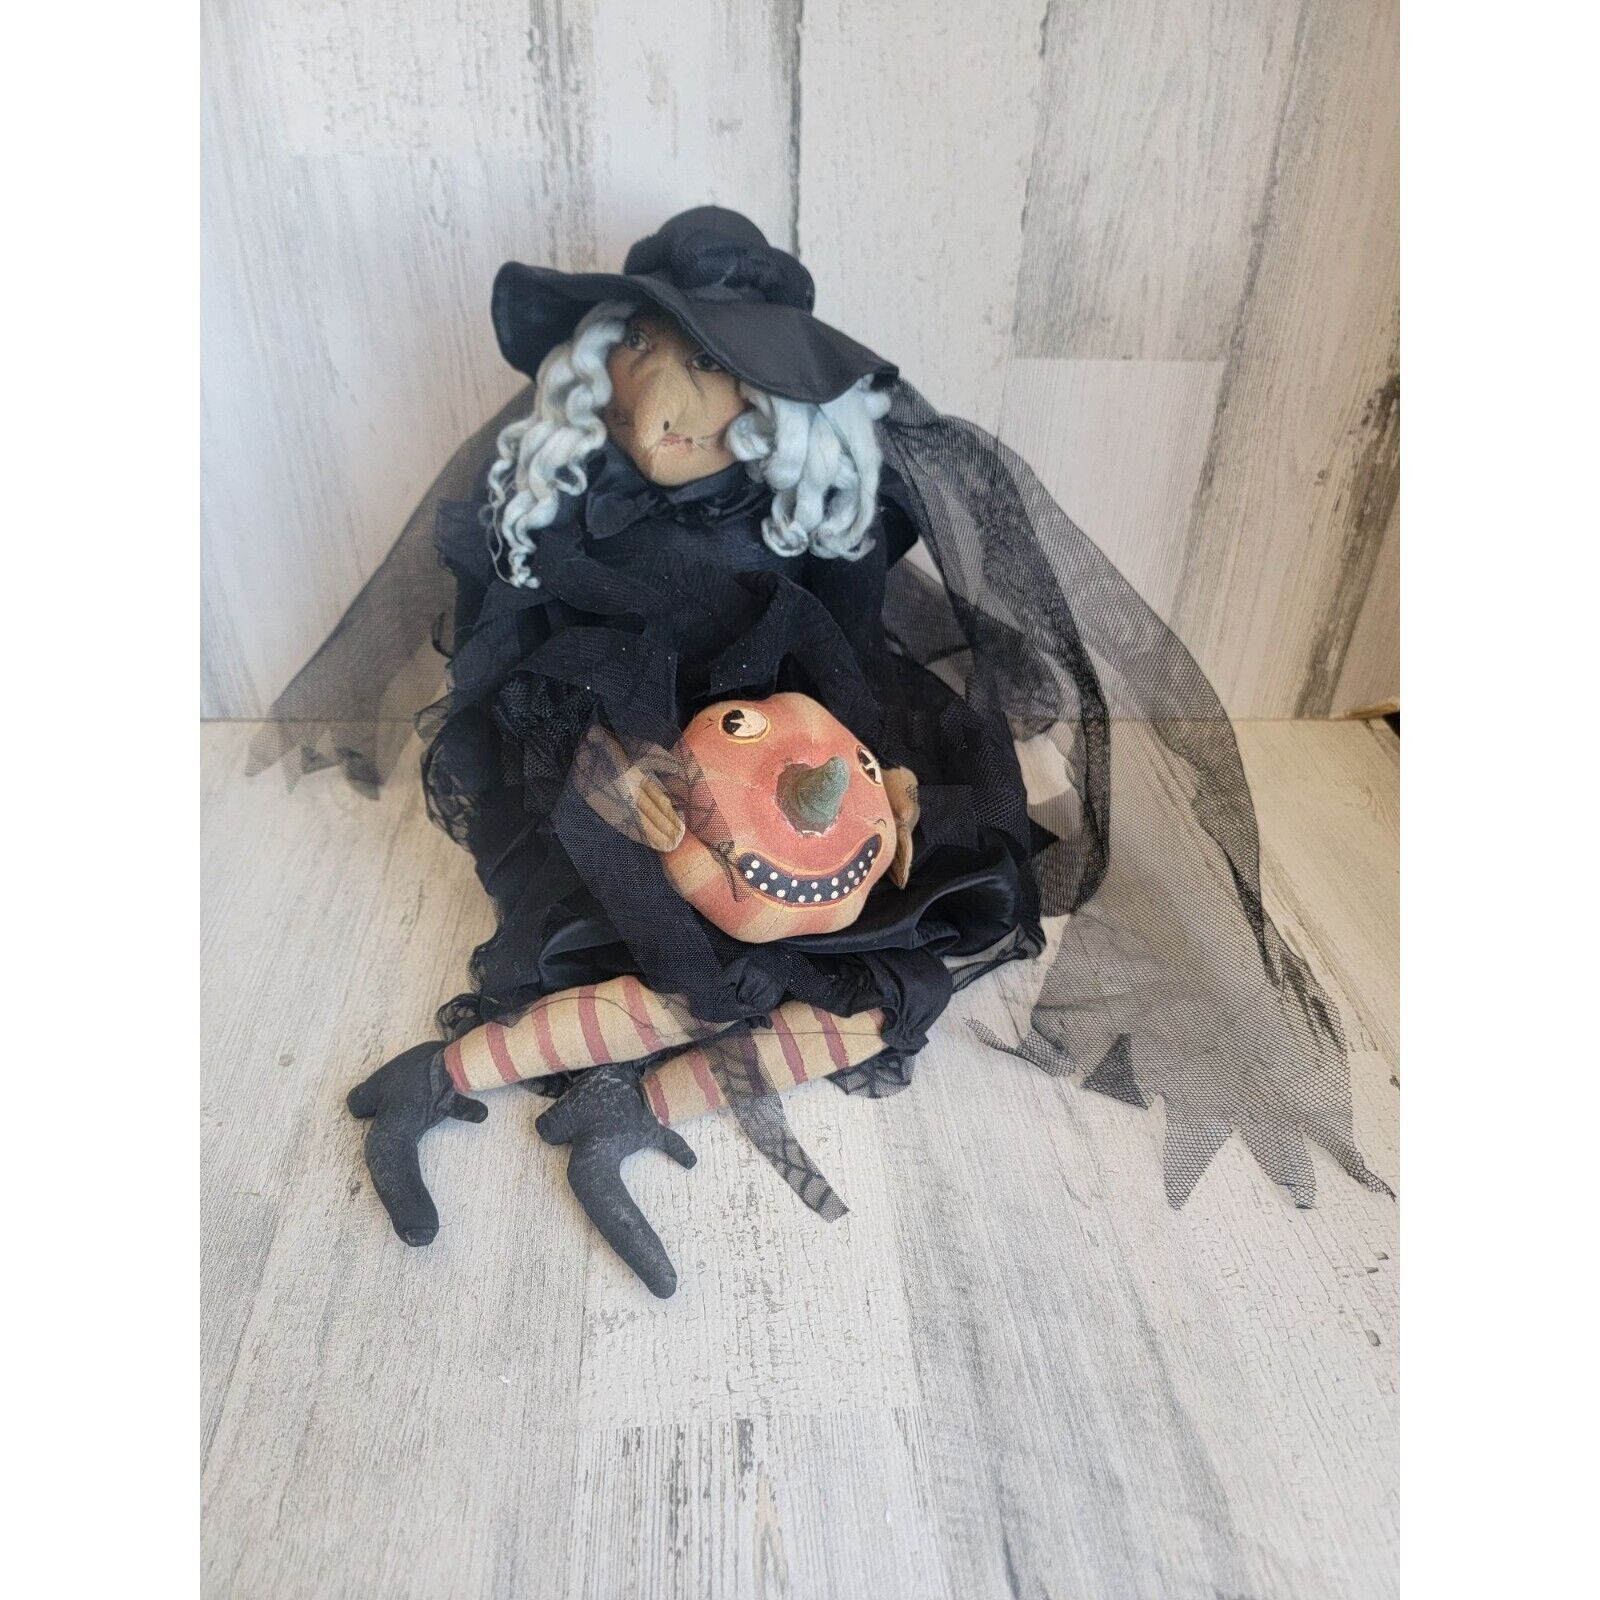 Unique vintage witch pumpkin doll figure plush home decor Halloween Sitting